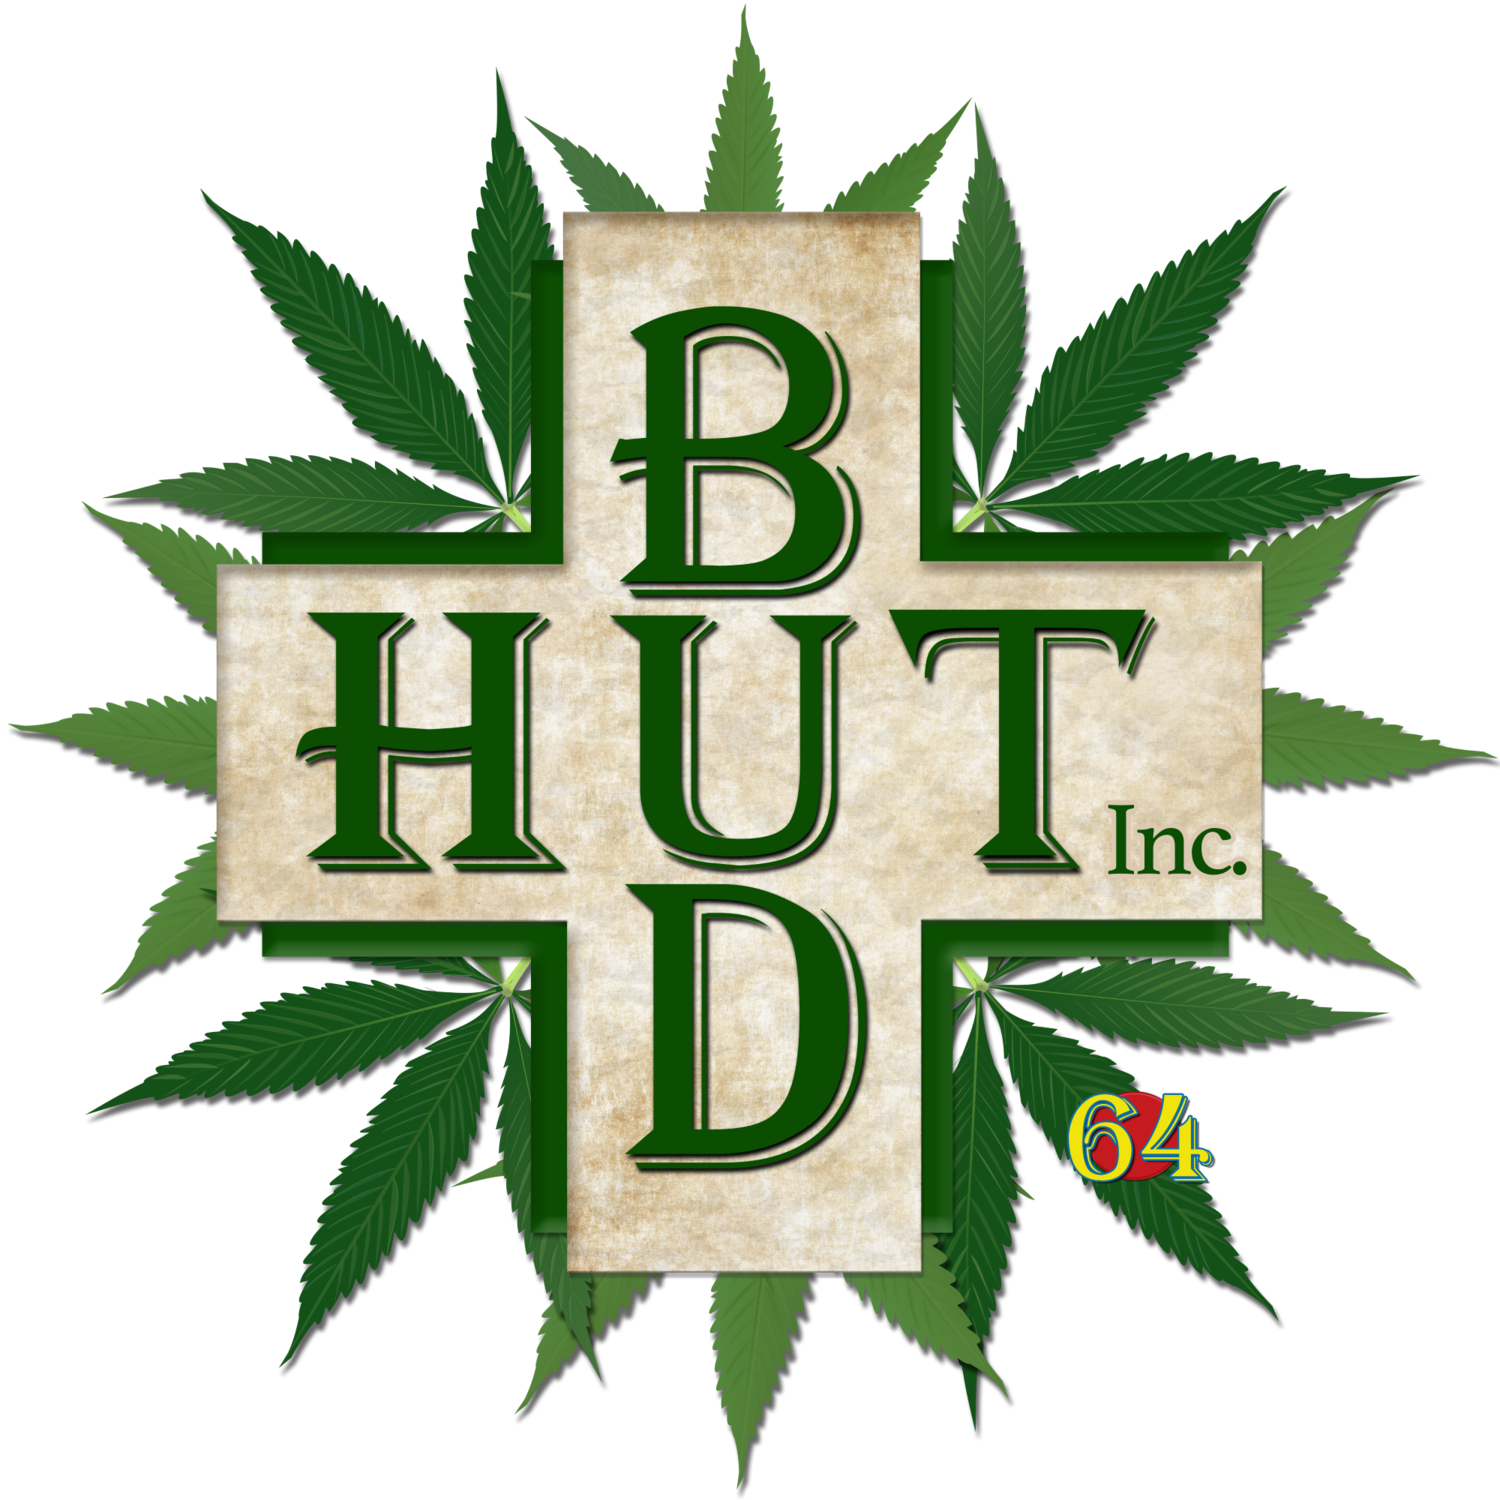 Bud Hut Inc